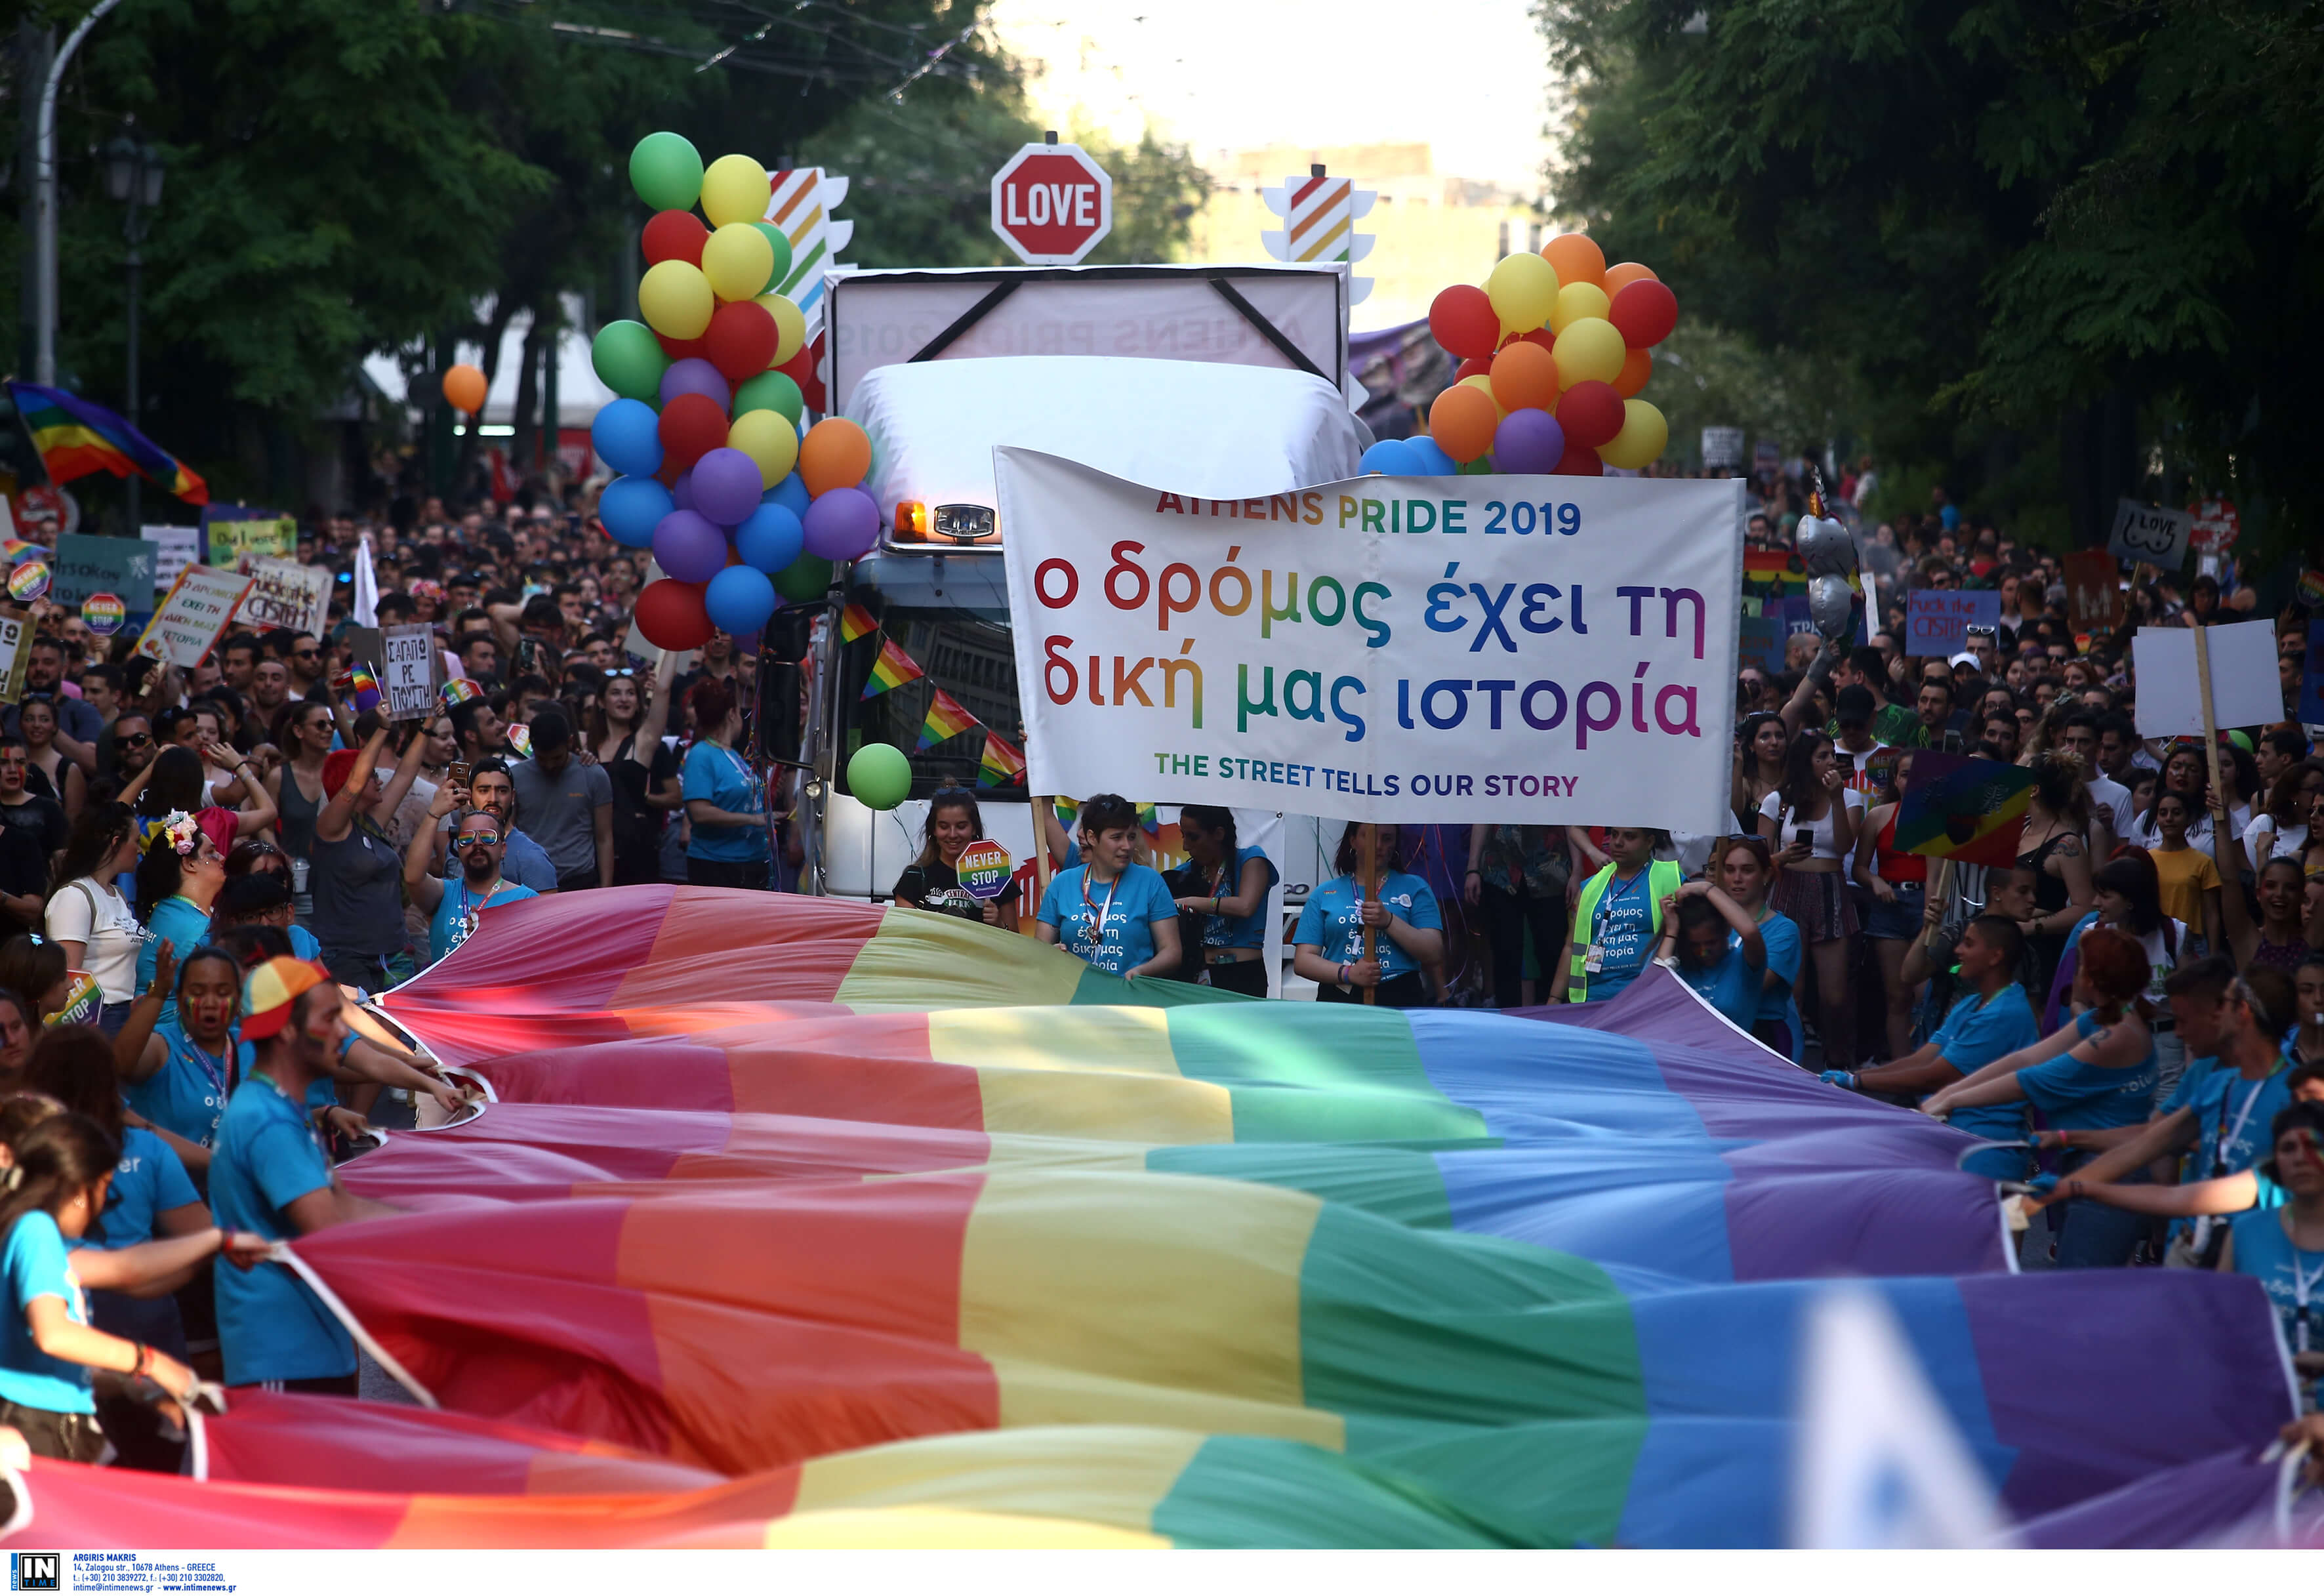 Athens Pride 2019: Η Αθήνα γιορτάζει την αγάπη στη μνήμη του Ζακ [pics]